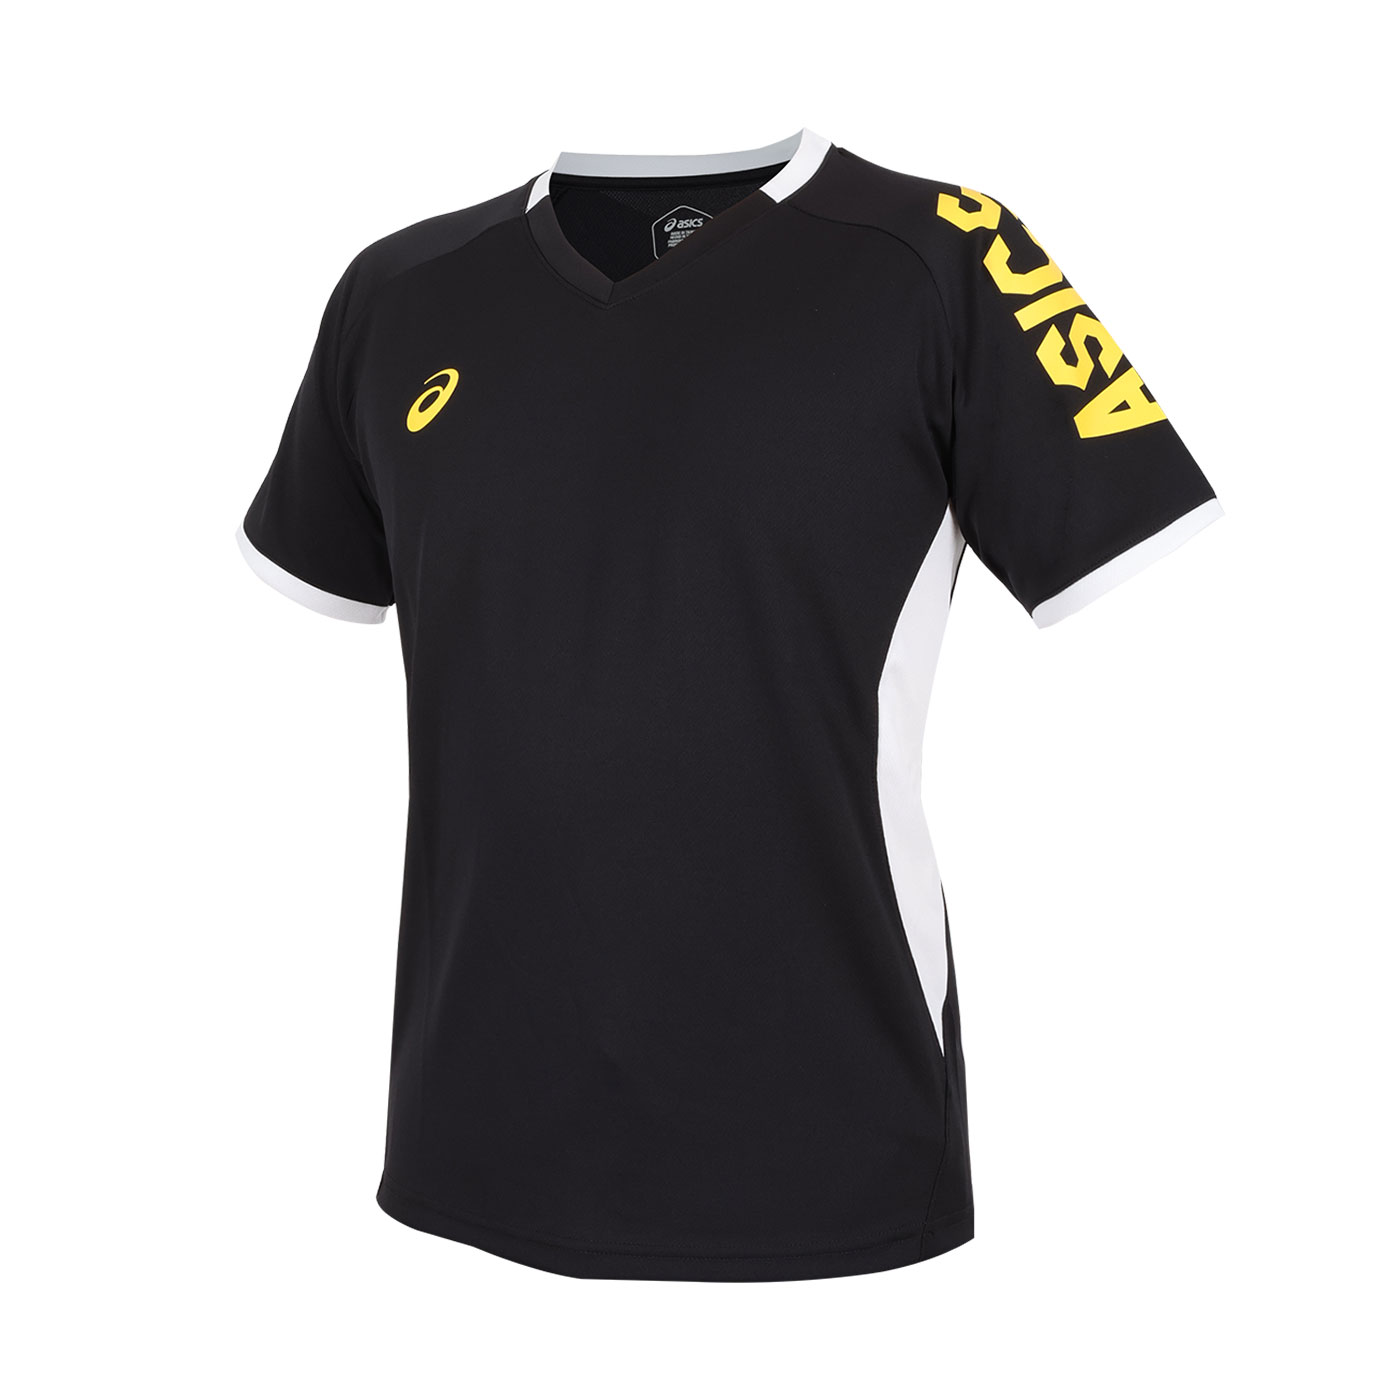 ASICS 排球短袖T恤  2053A196-001 - 黑白黃